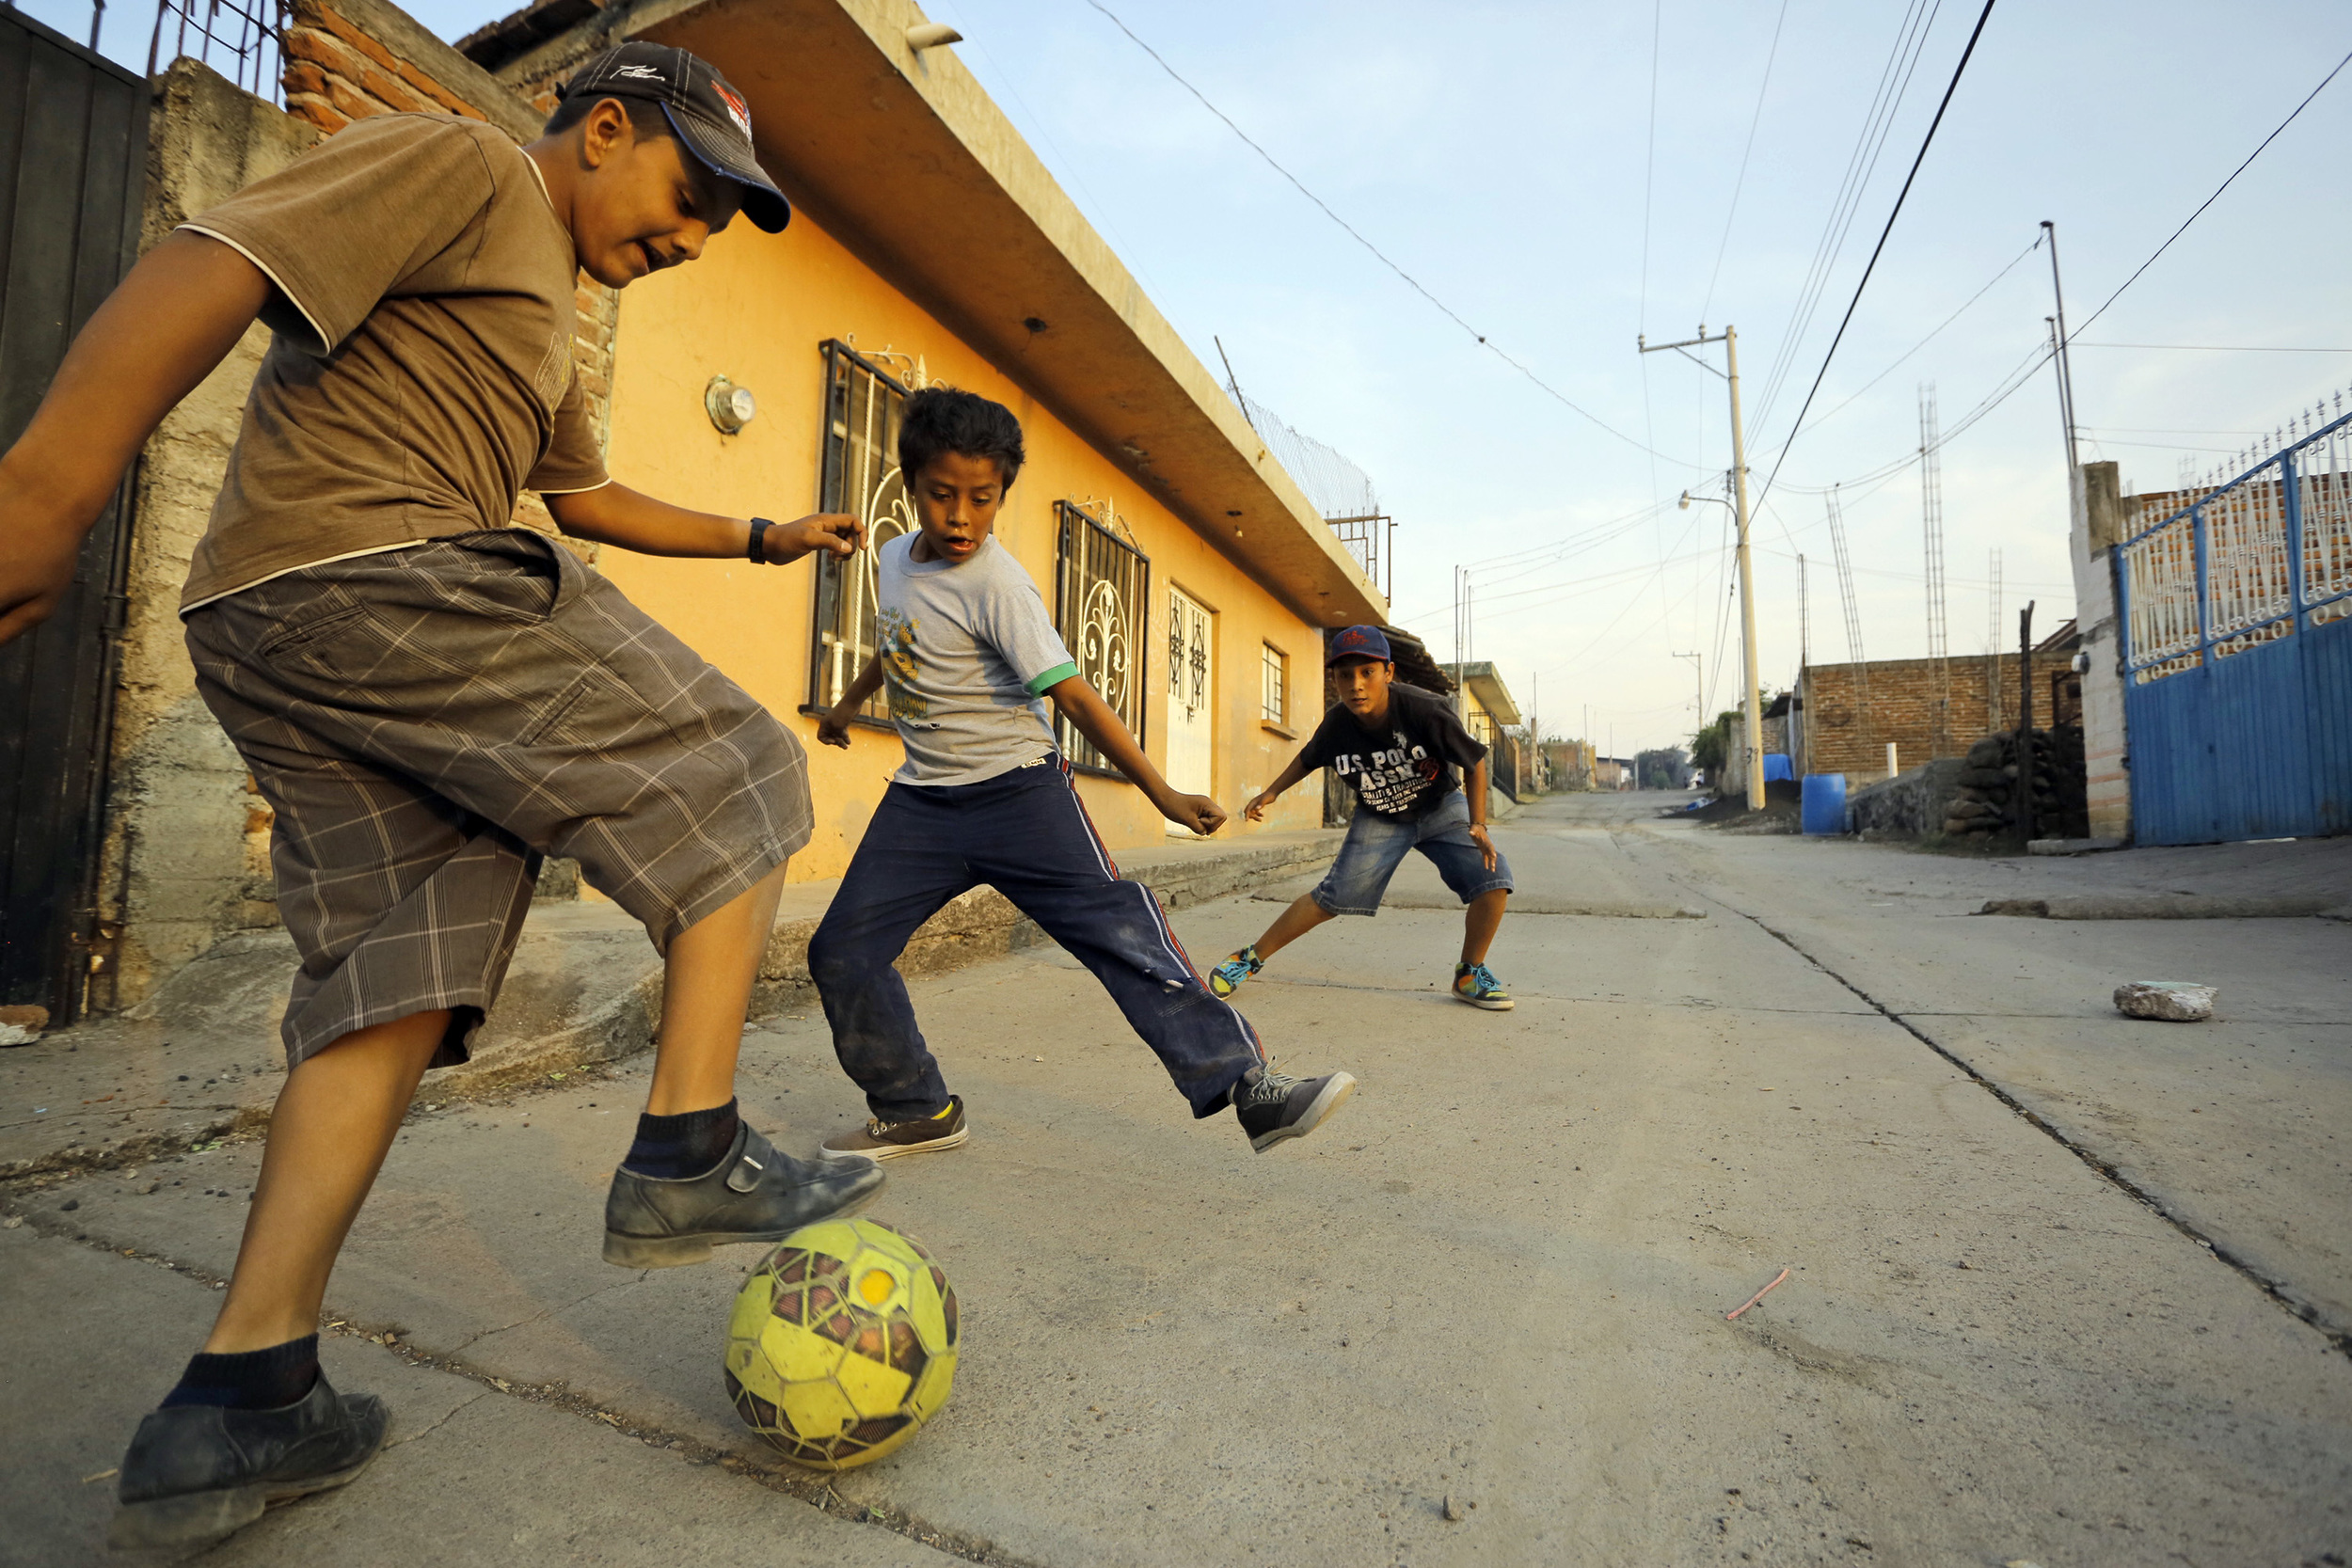 futbol en la calle_3000.jpg